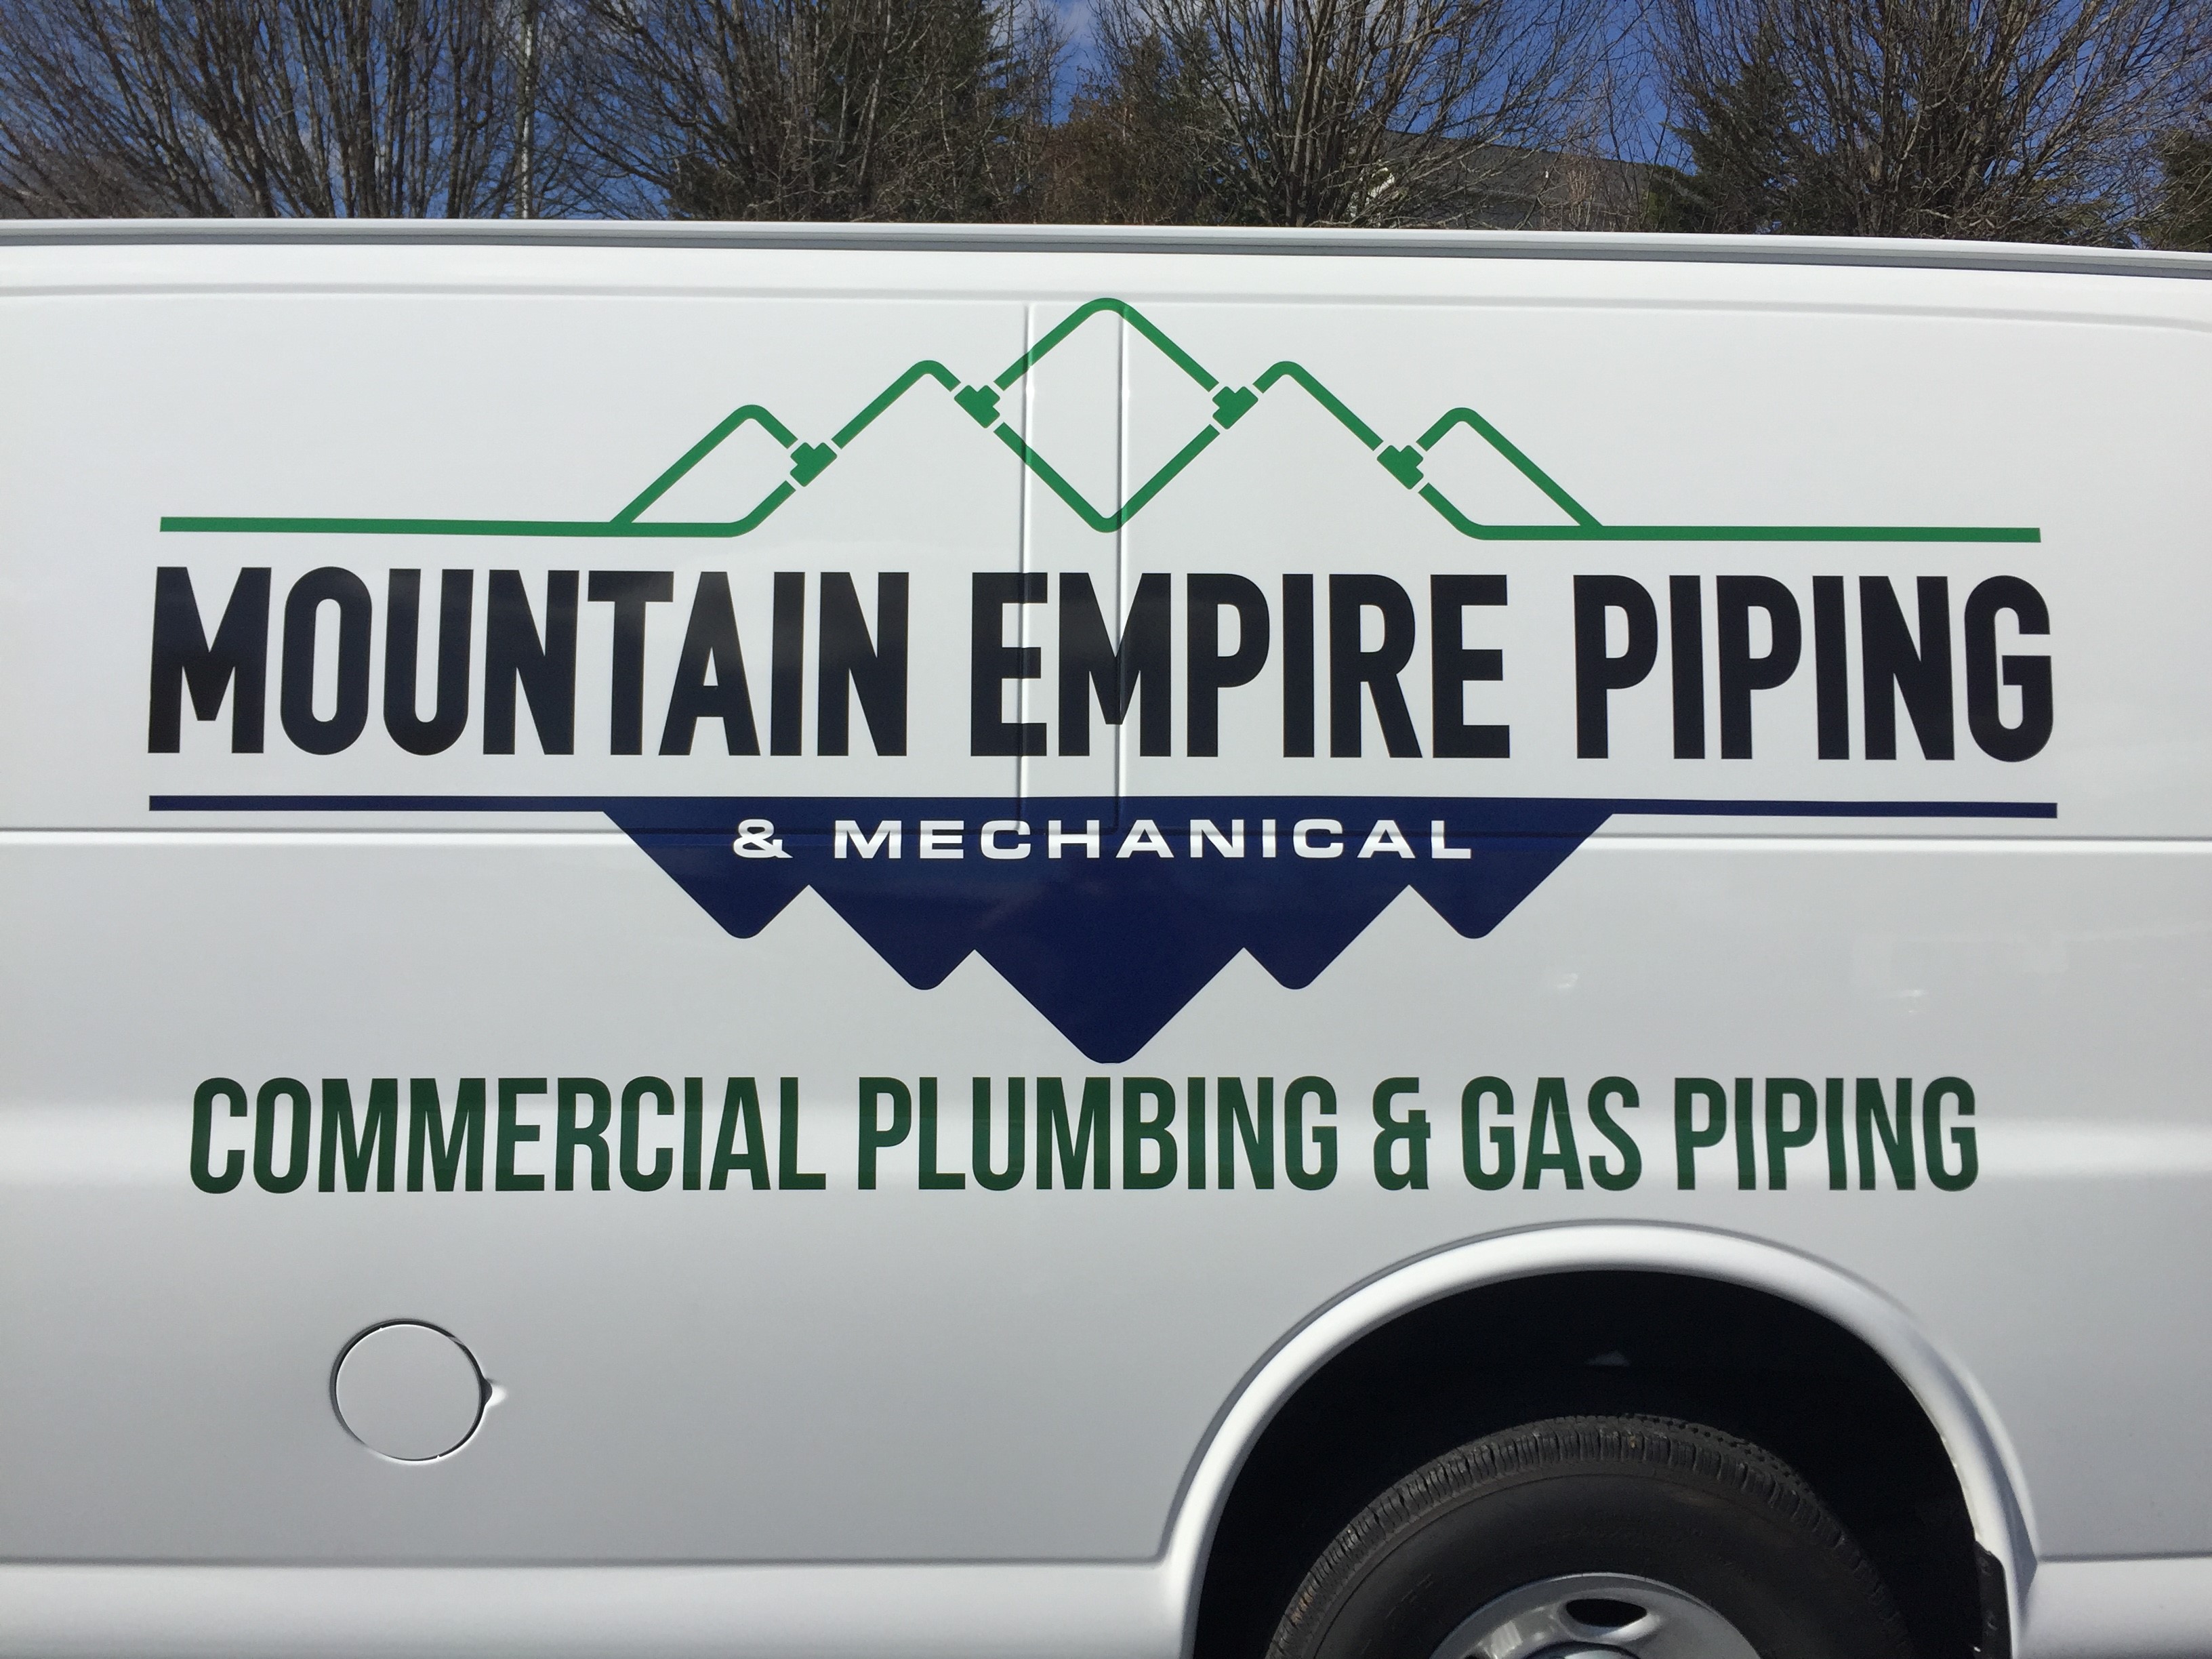 Mountzin Empire Piping & Mechanical vehicle decals